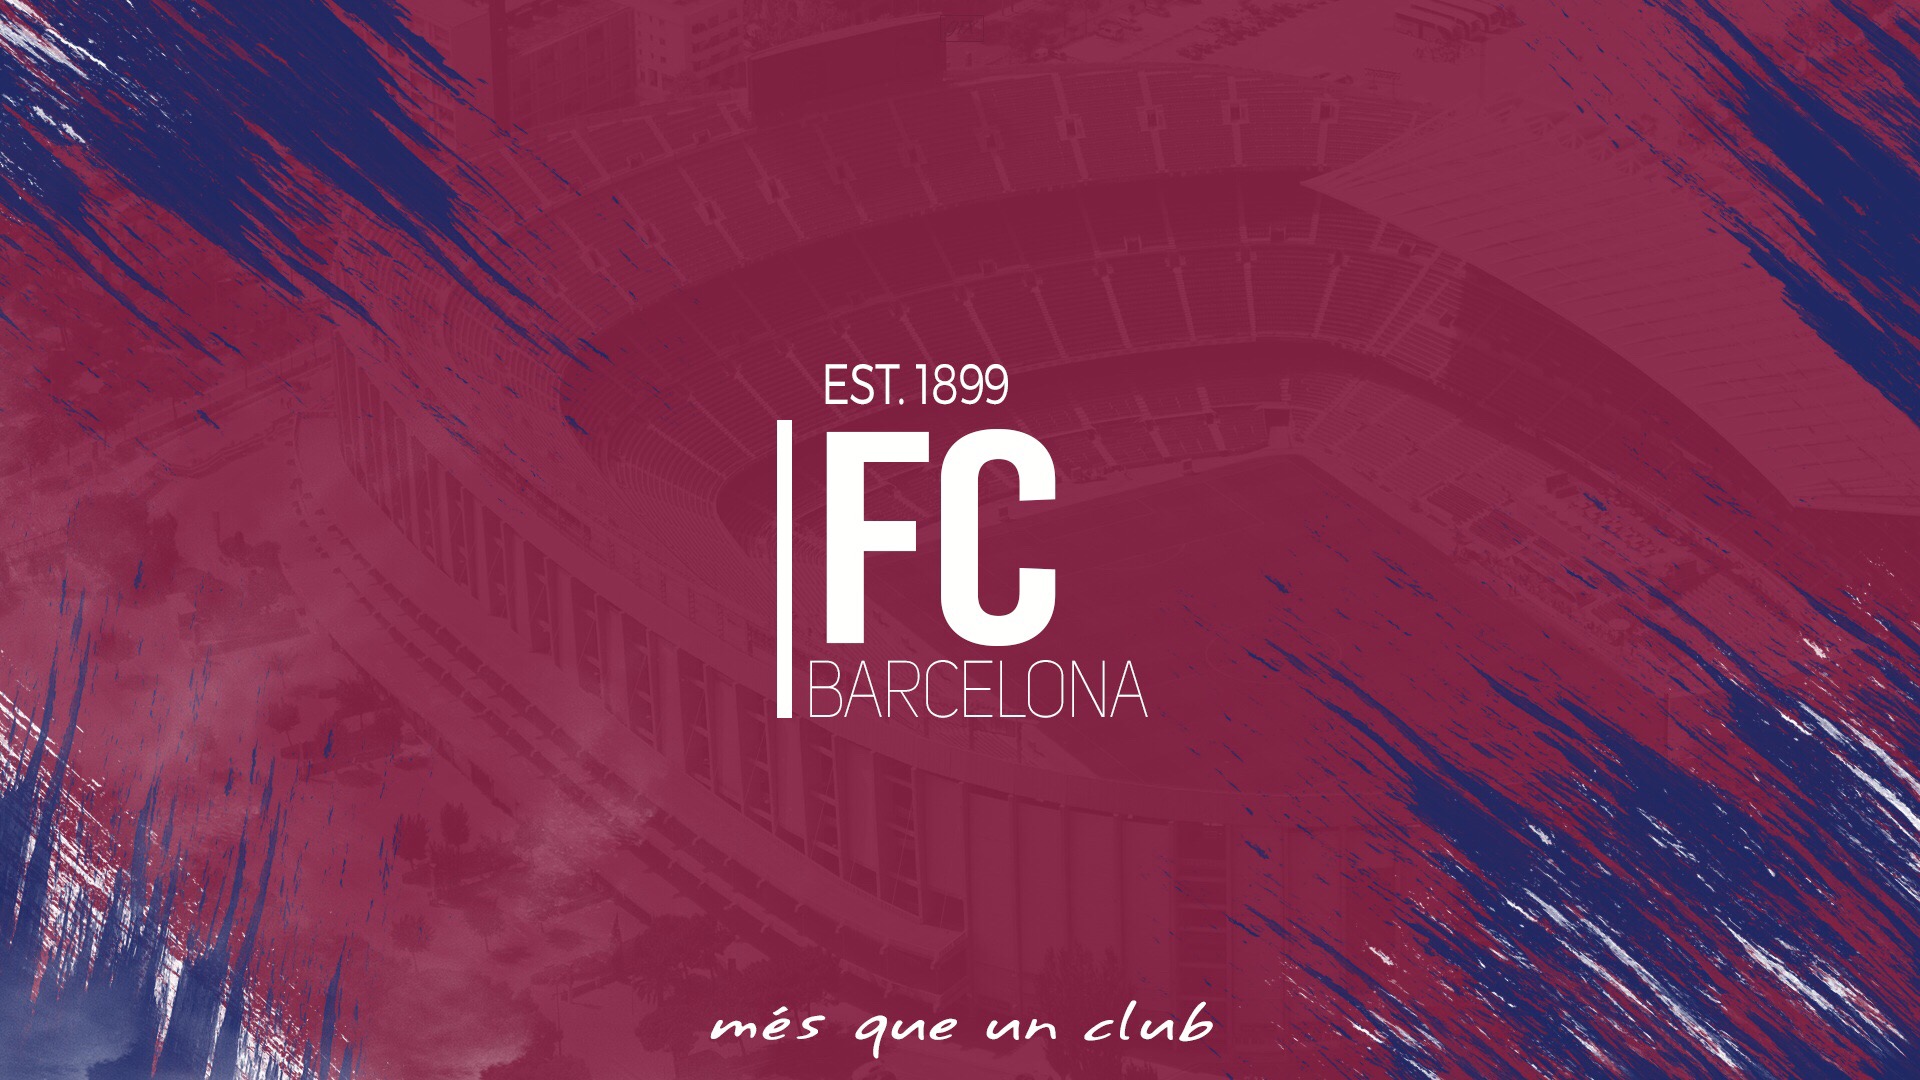 Hd Desktop Wallpaper: Sports, Emblem, Soccer, Fc Barcelona, Camp Nou  Download Free Picture #504461